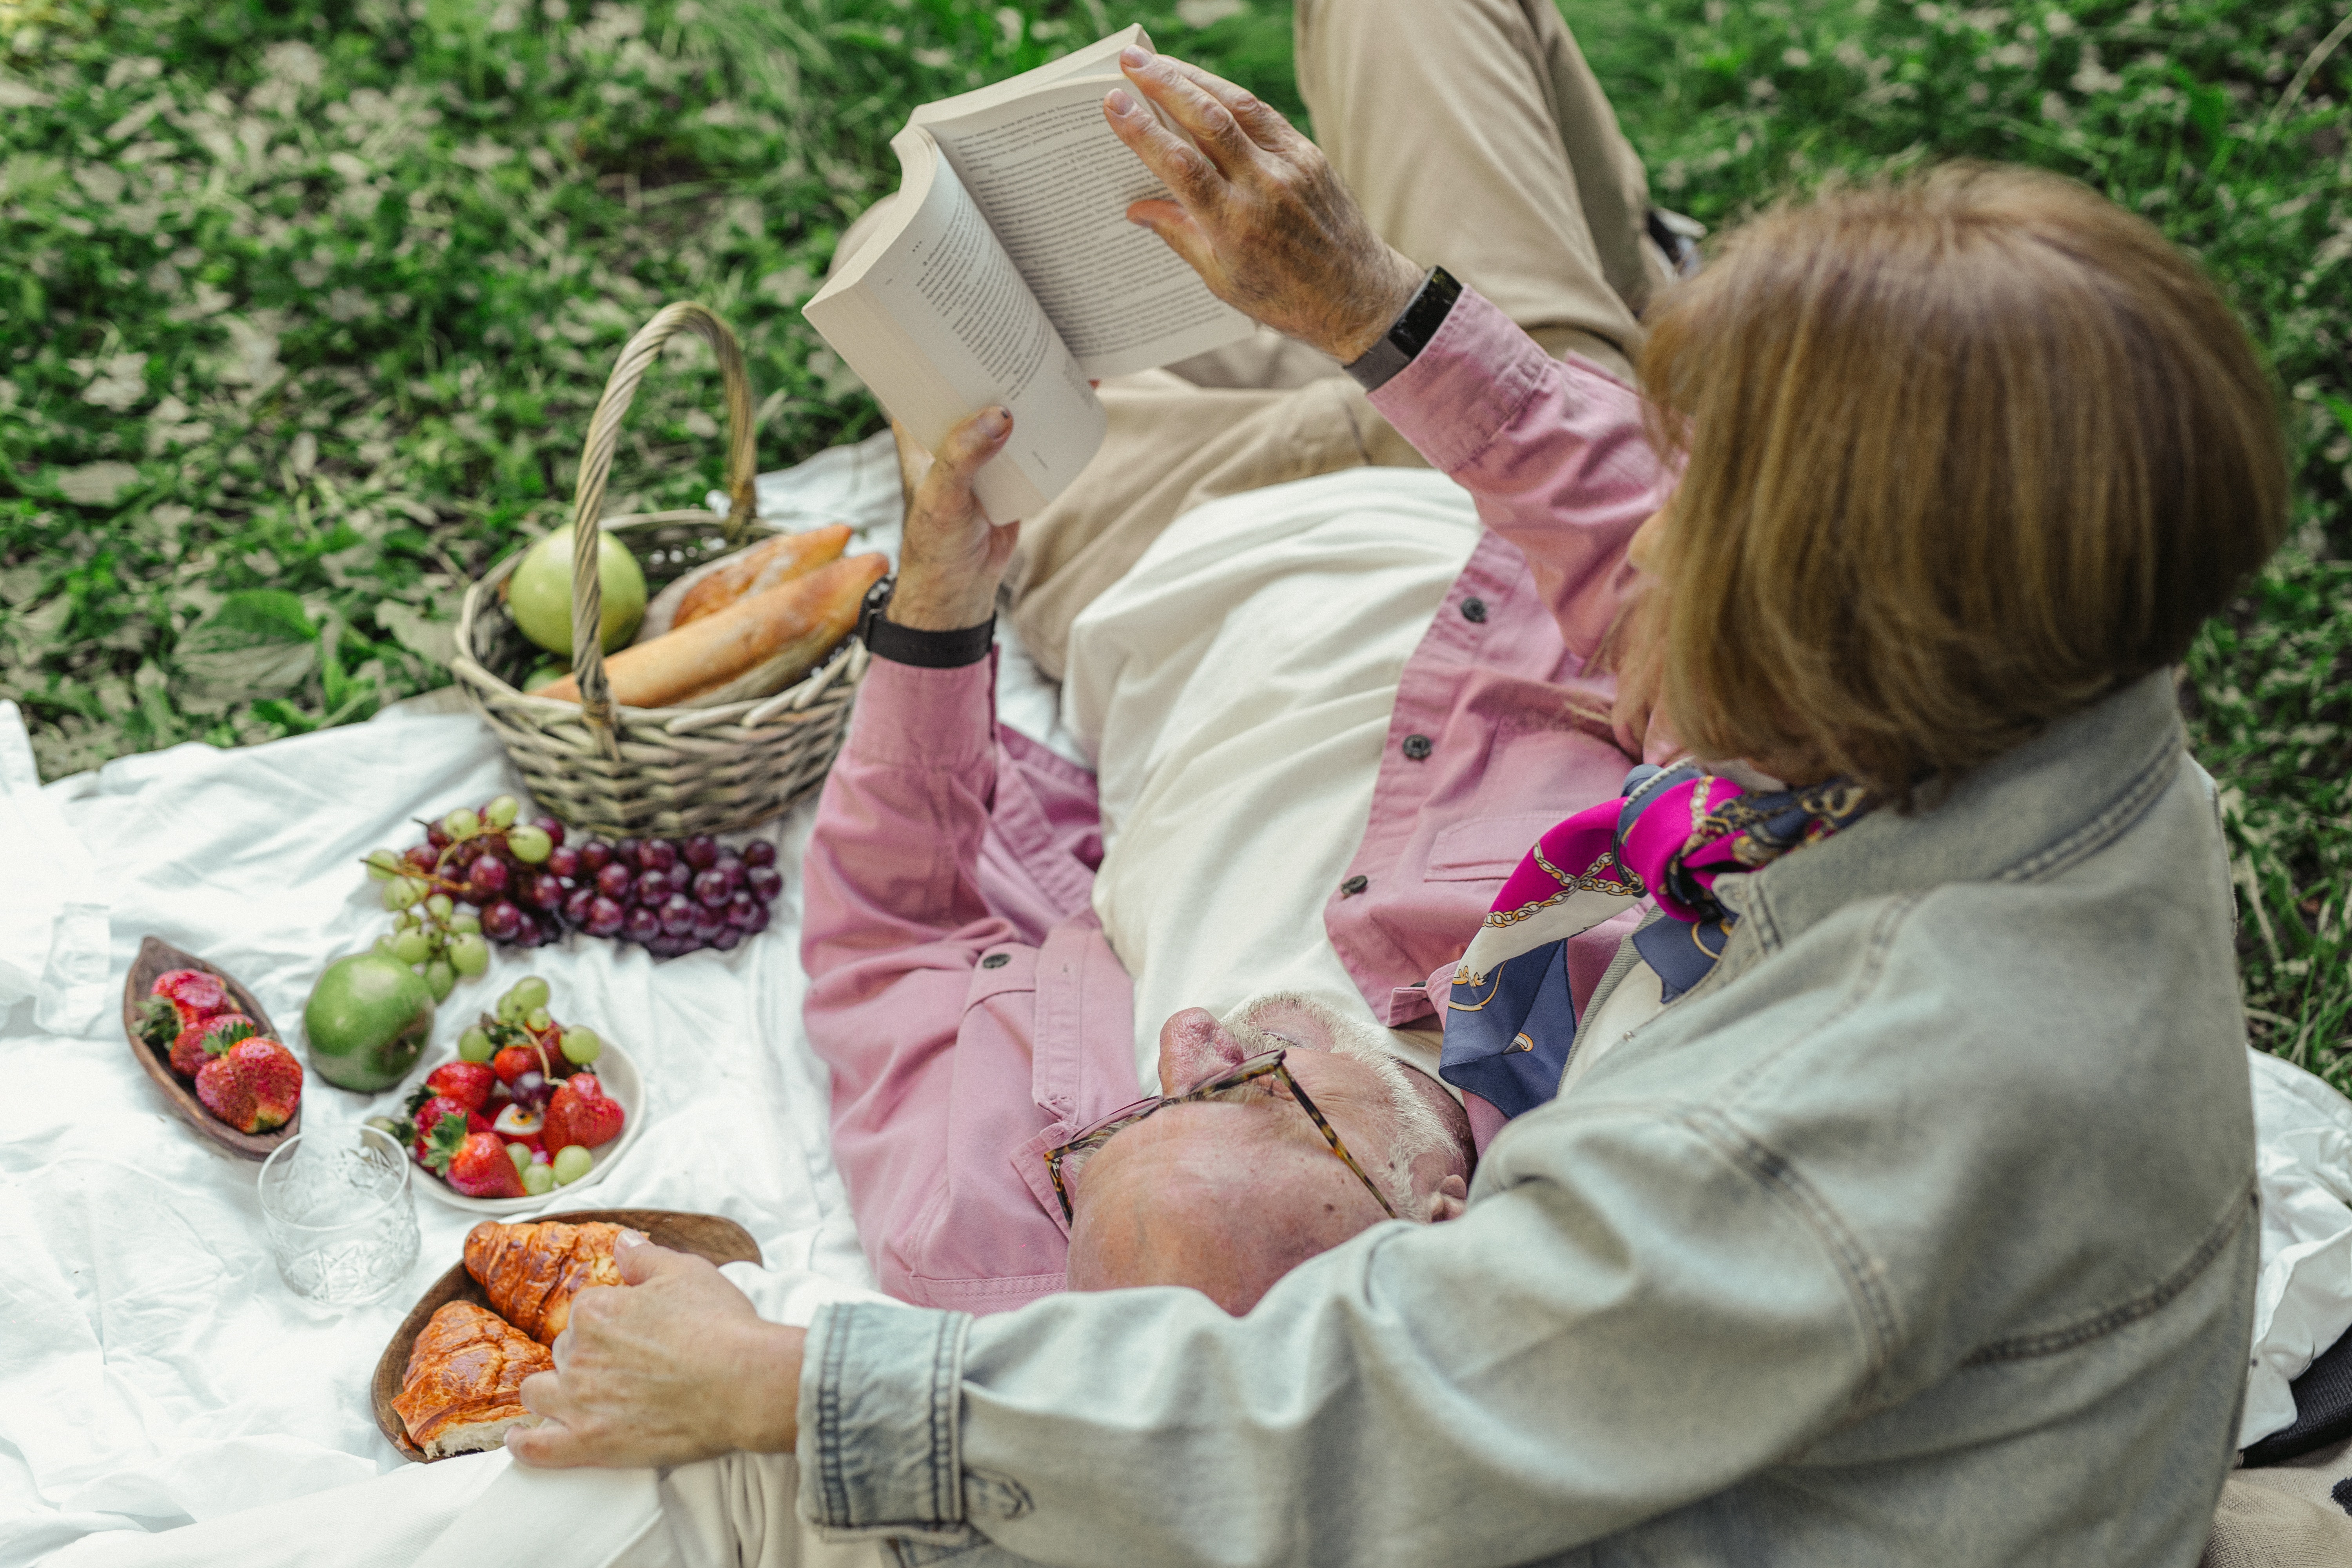 An elderly couple having a picnic. | Source: Pexels